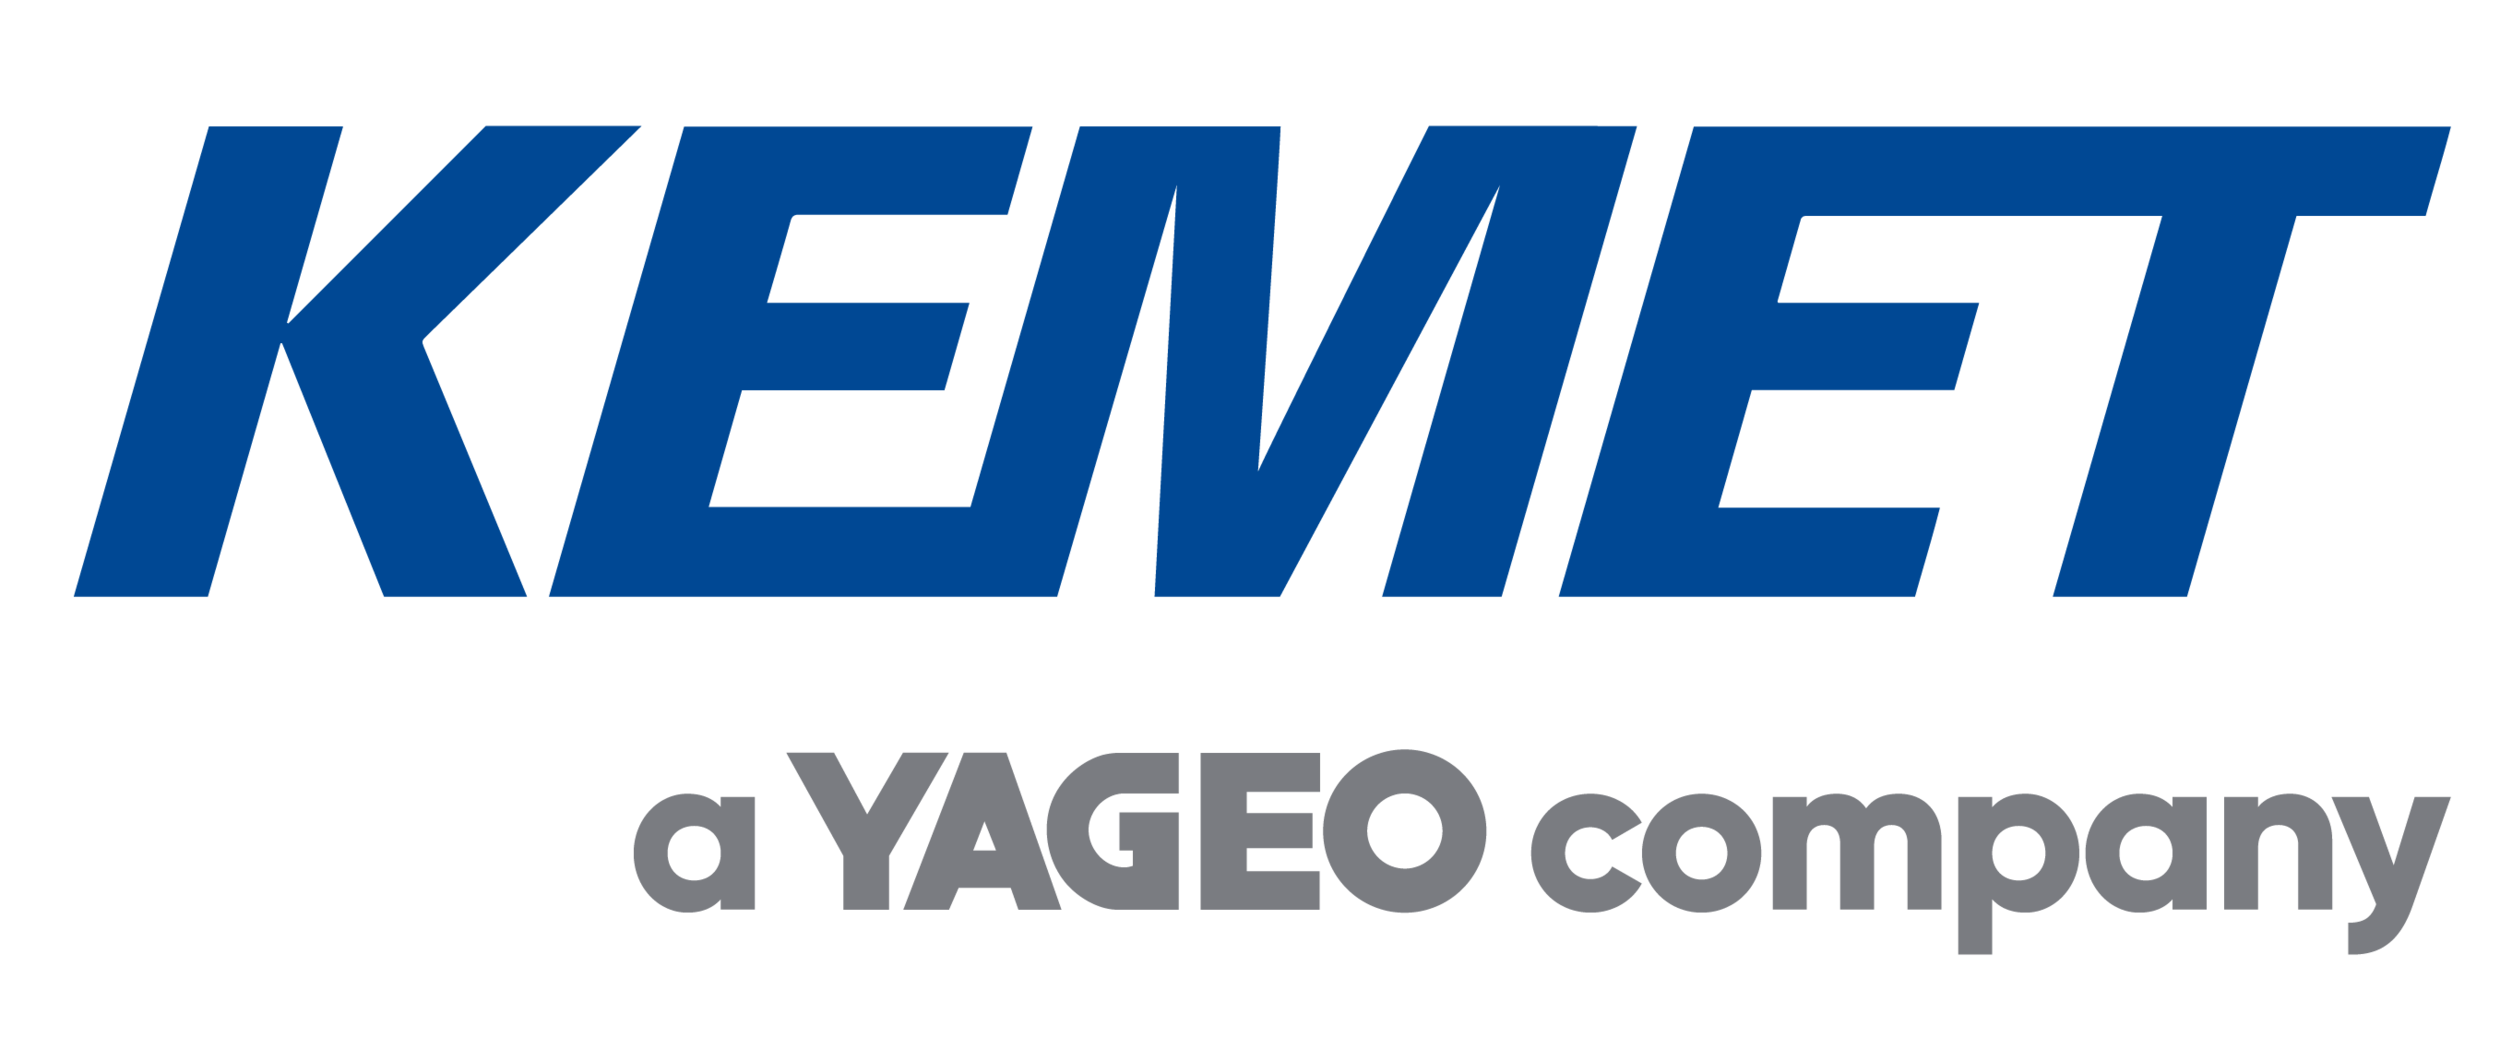 KEMET_YAGEO_website_logo__3.png